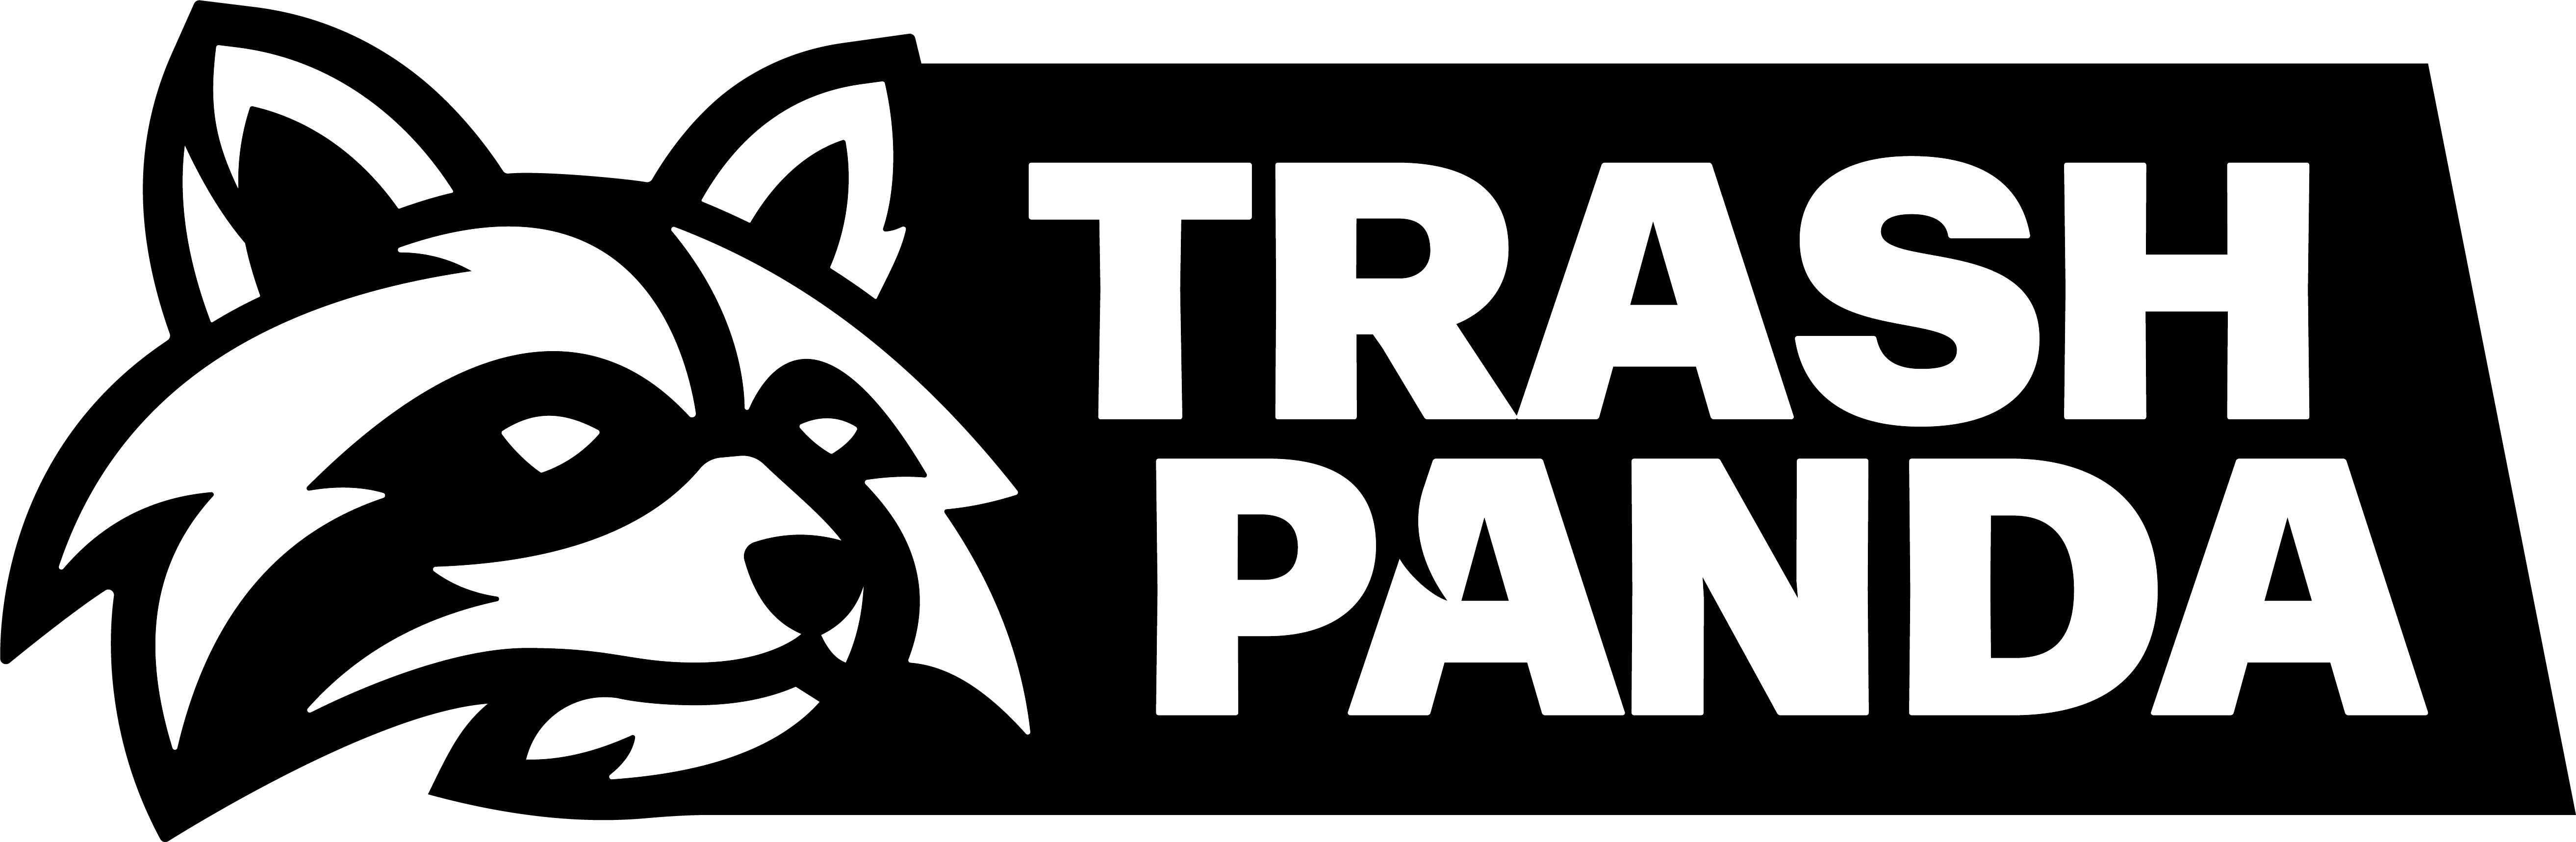 Trash Panda Logo Primary Lockup Inverse Black on White_1@2x